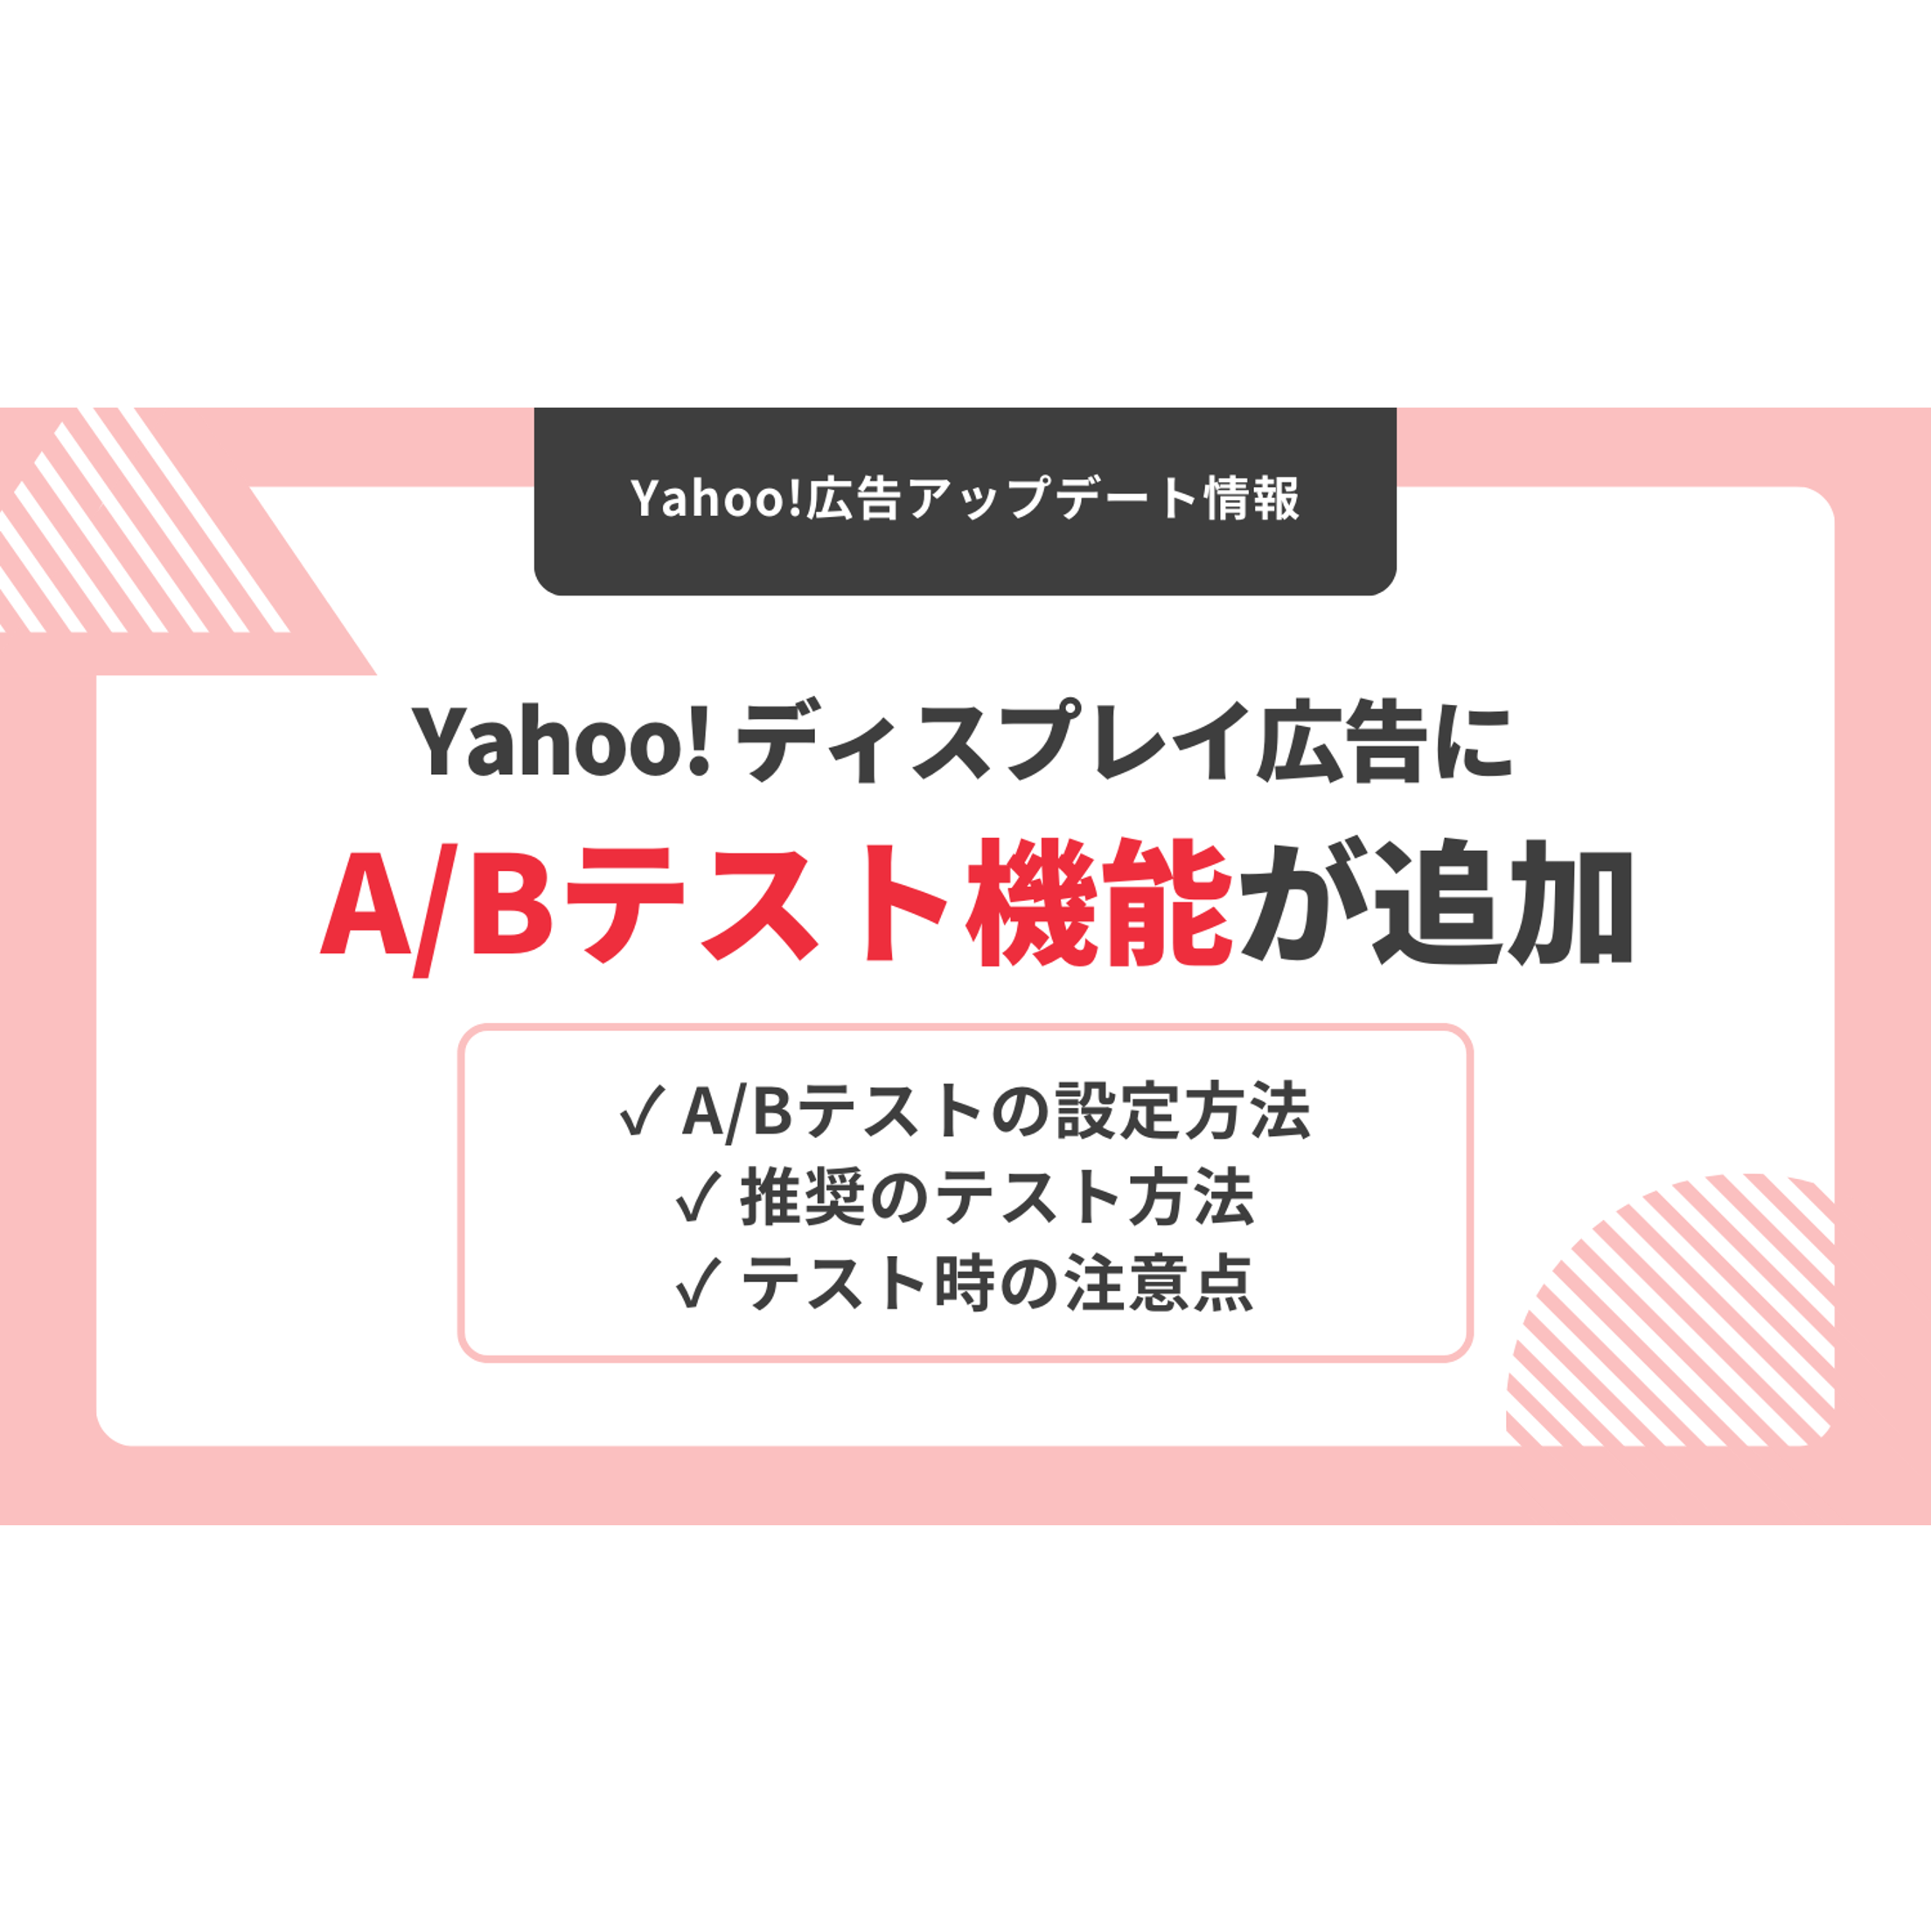 Yahoo! ディスプレイ広告で A/B テスト機能の提供開始　設定方法と注意点を解説 | 株式会社グラッドキューブ